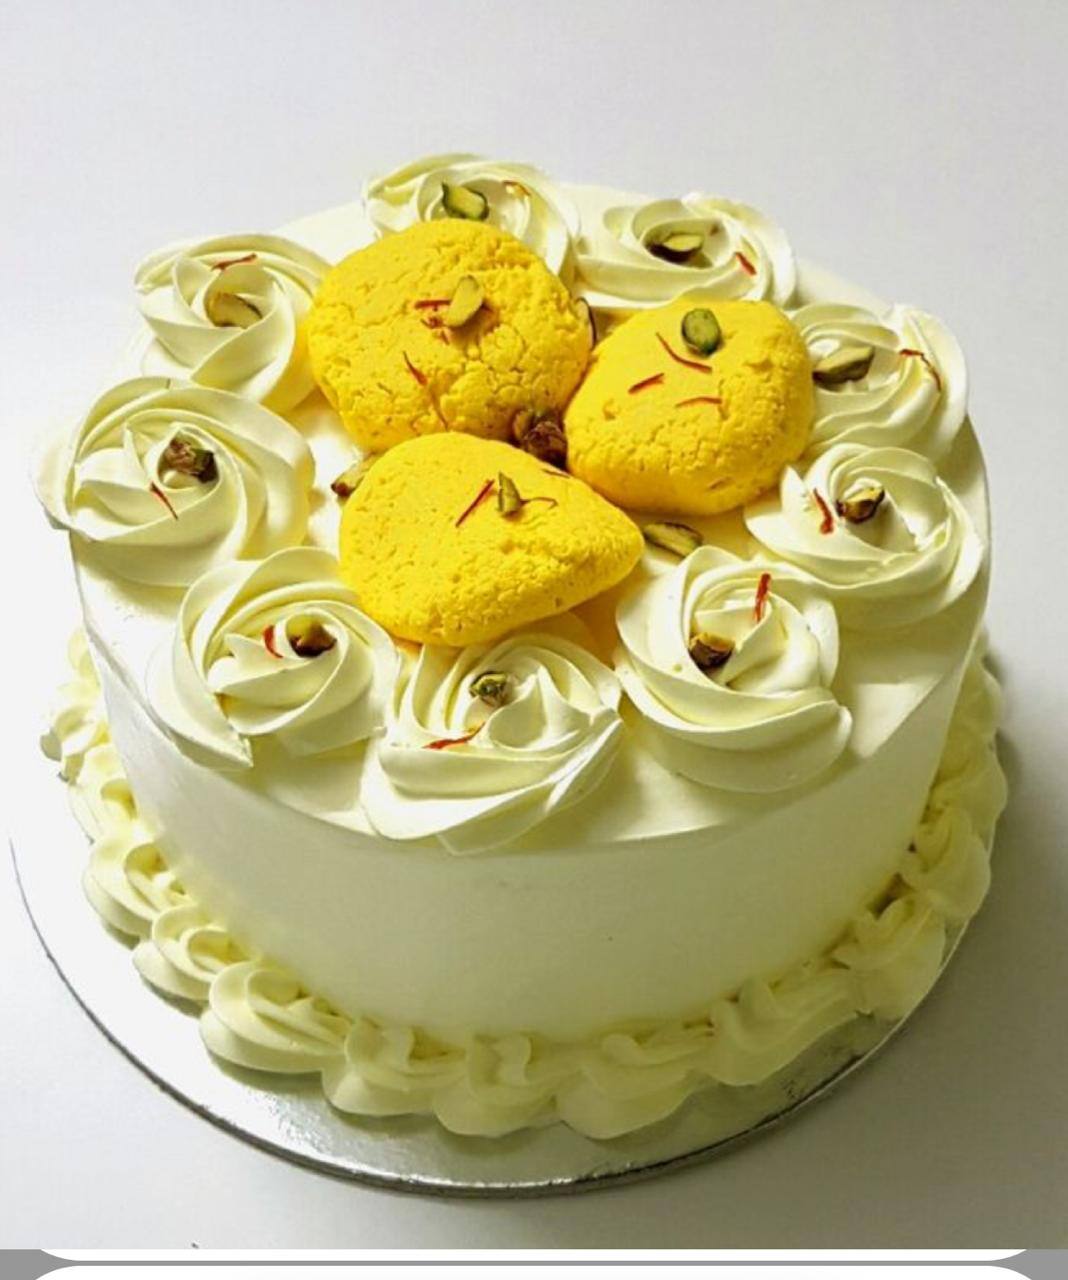 Titanic theme cake 🎂 @Yashbakers-Ravet #theme #cakeidea #decoration  #birthday #anniversary - YouTube